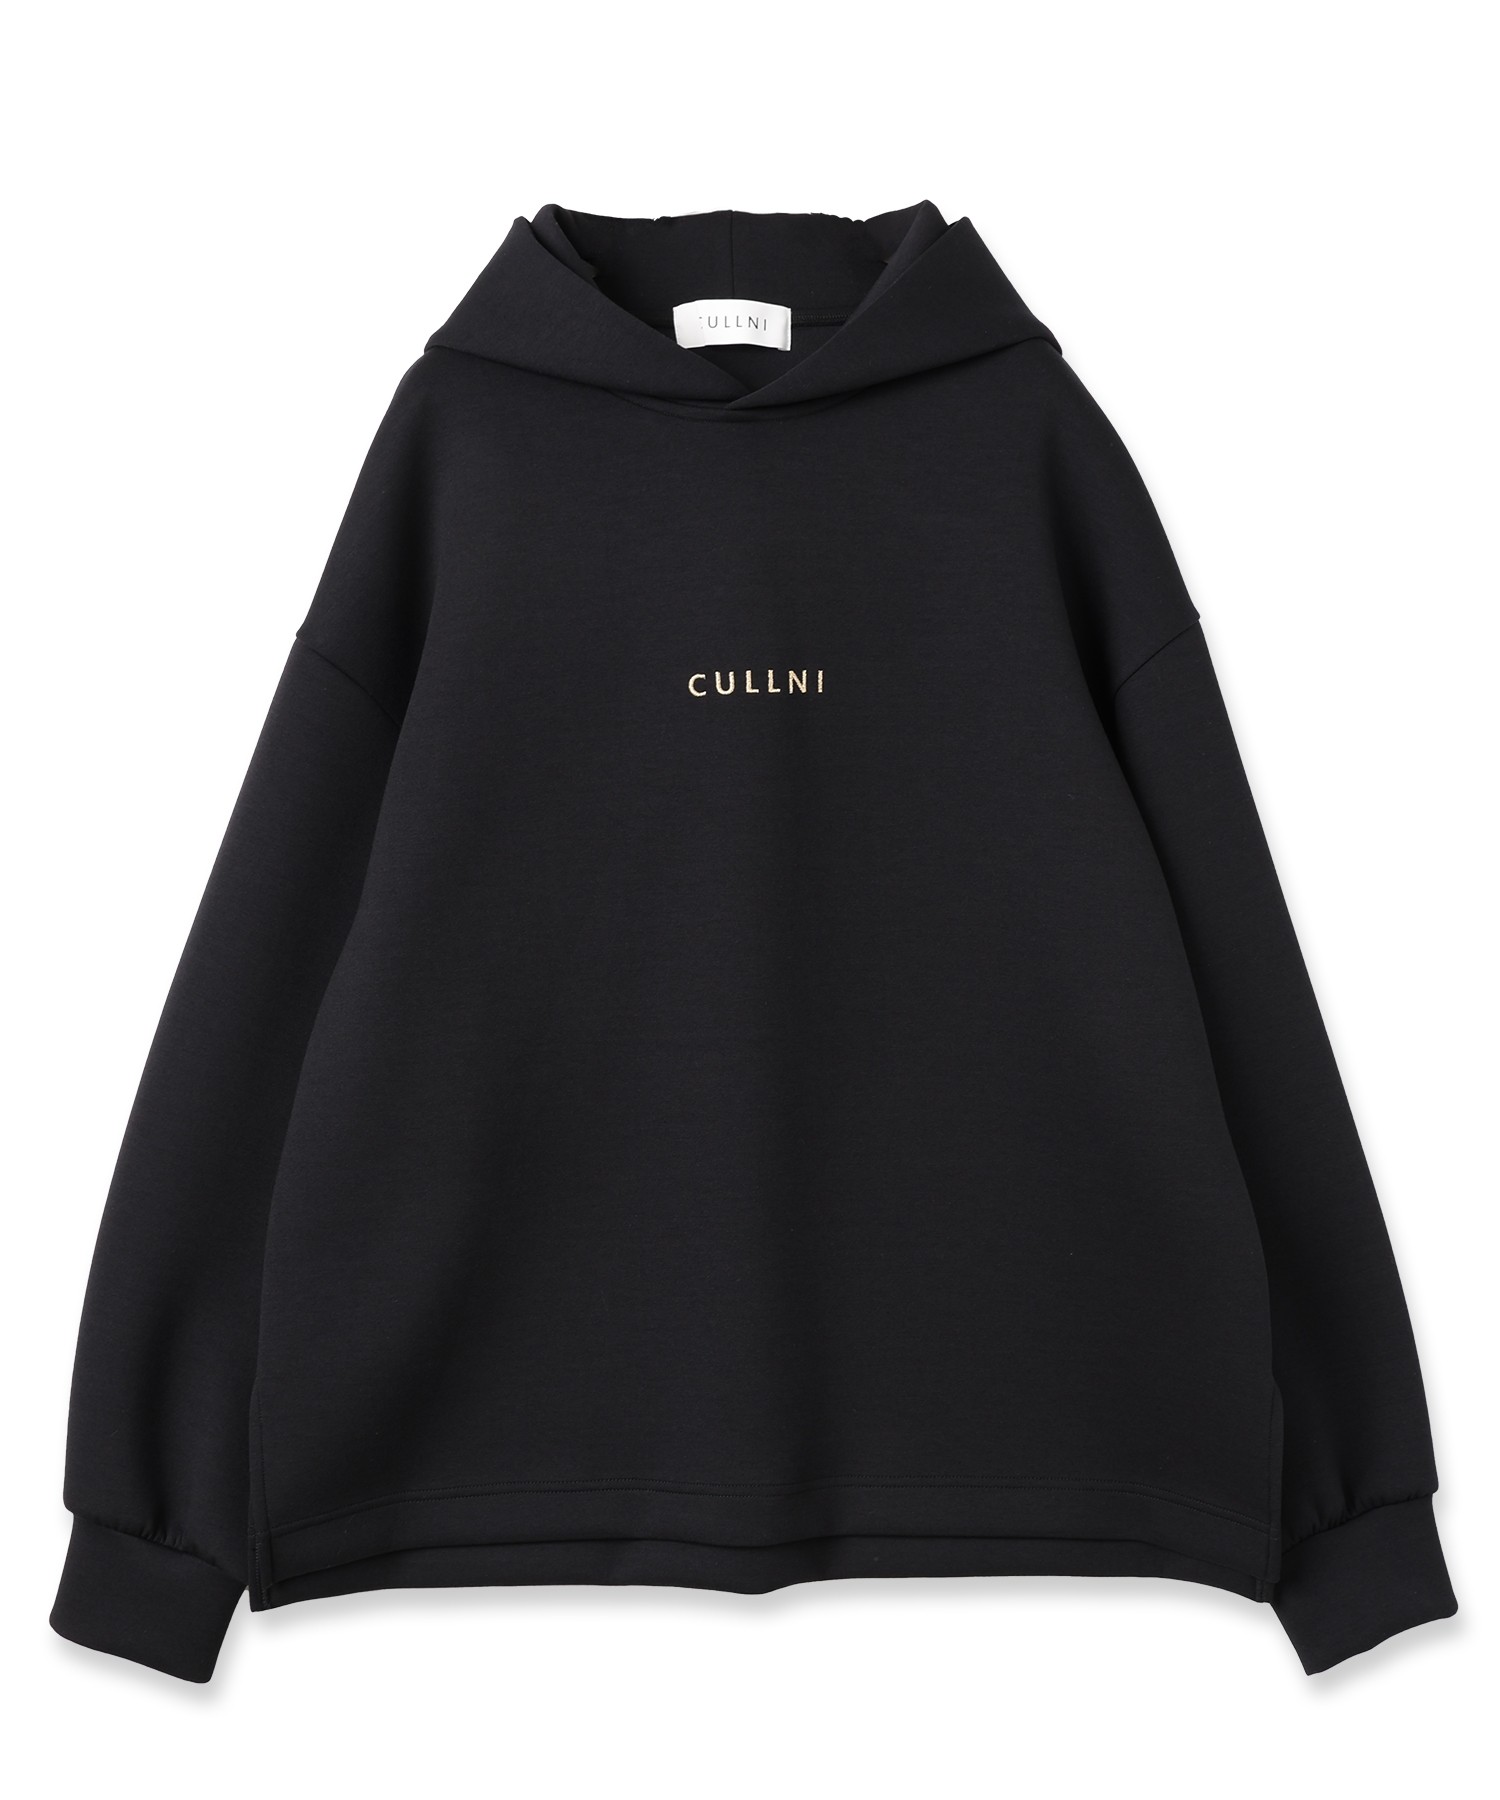 CULLNI(クルニ) / CULLNI Logo Embroidery Hoodie /2(2 BLACK)｜ ザ